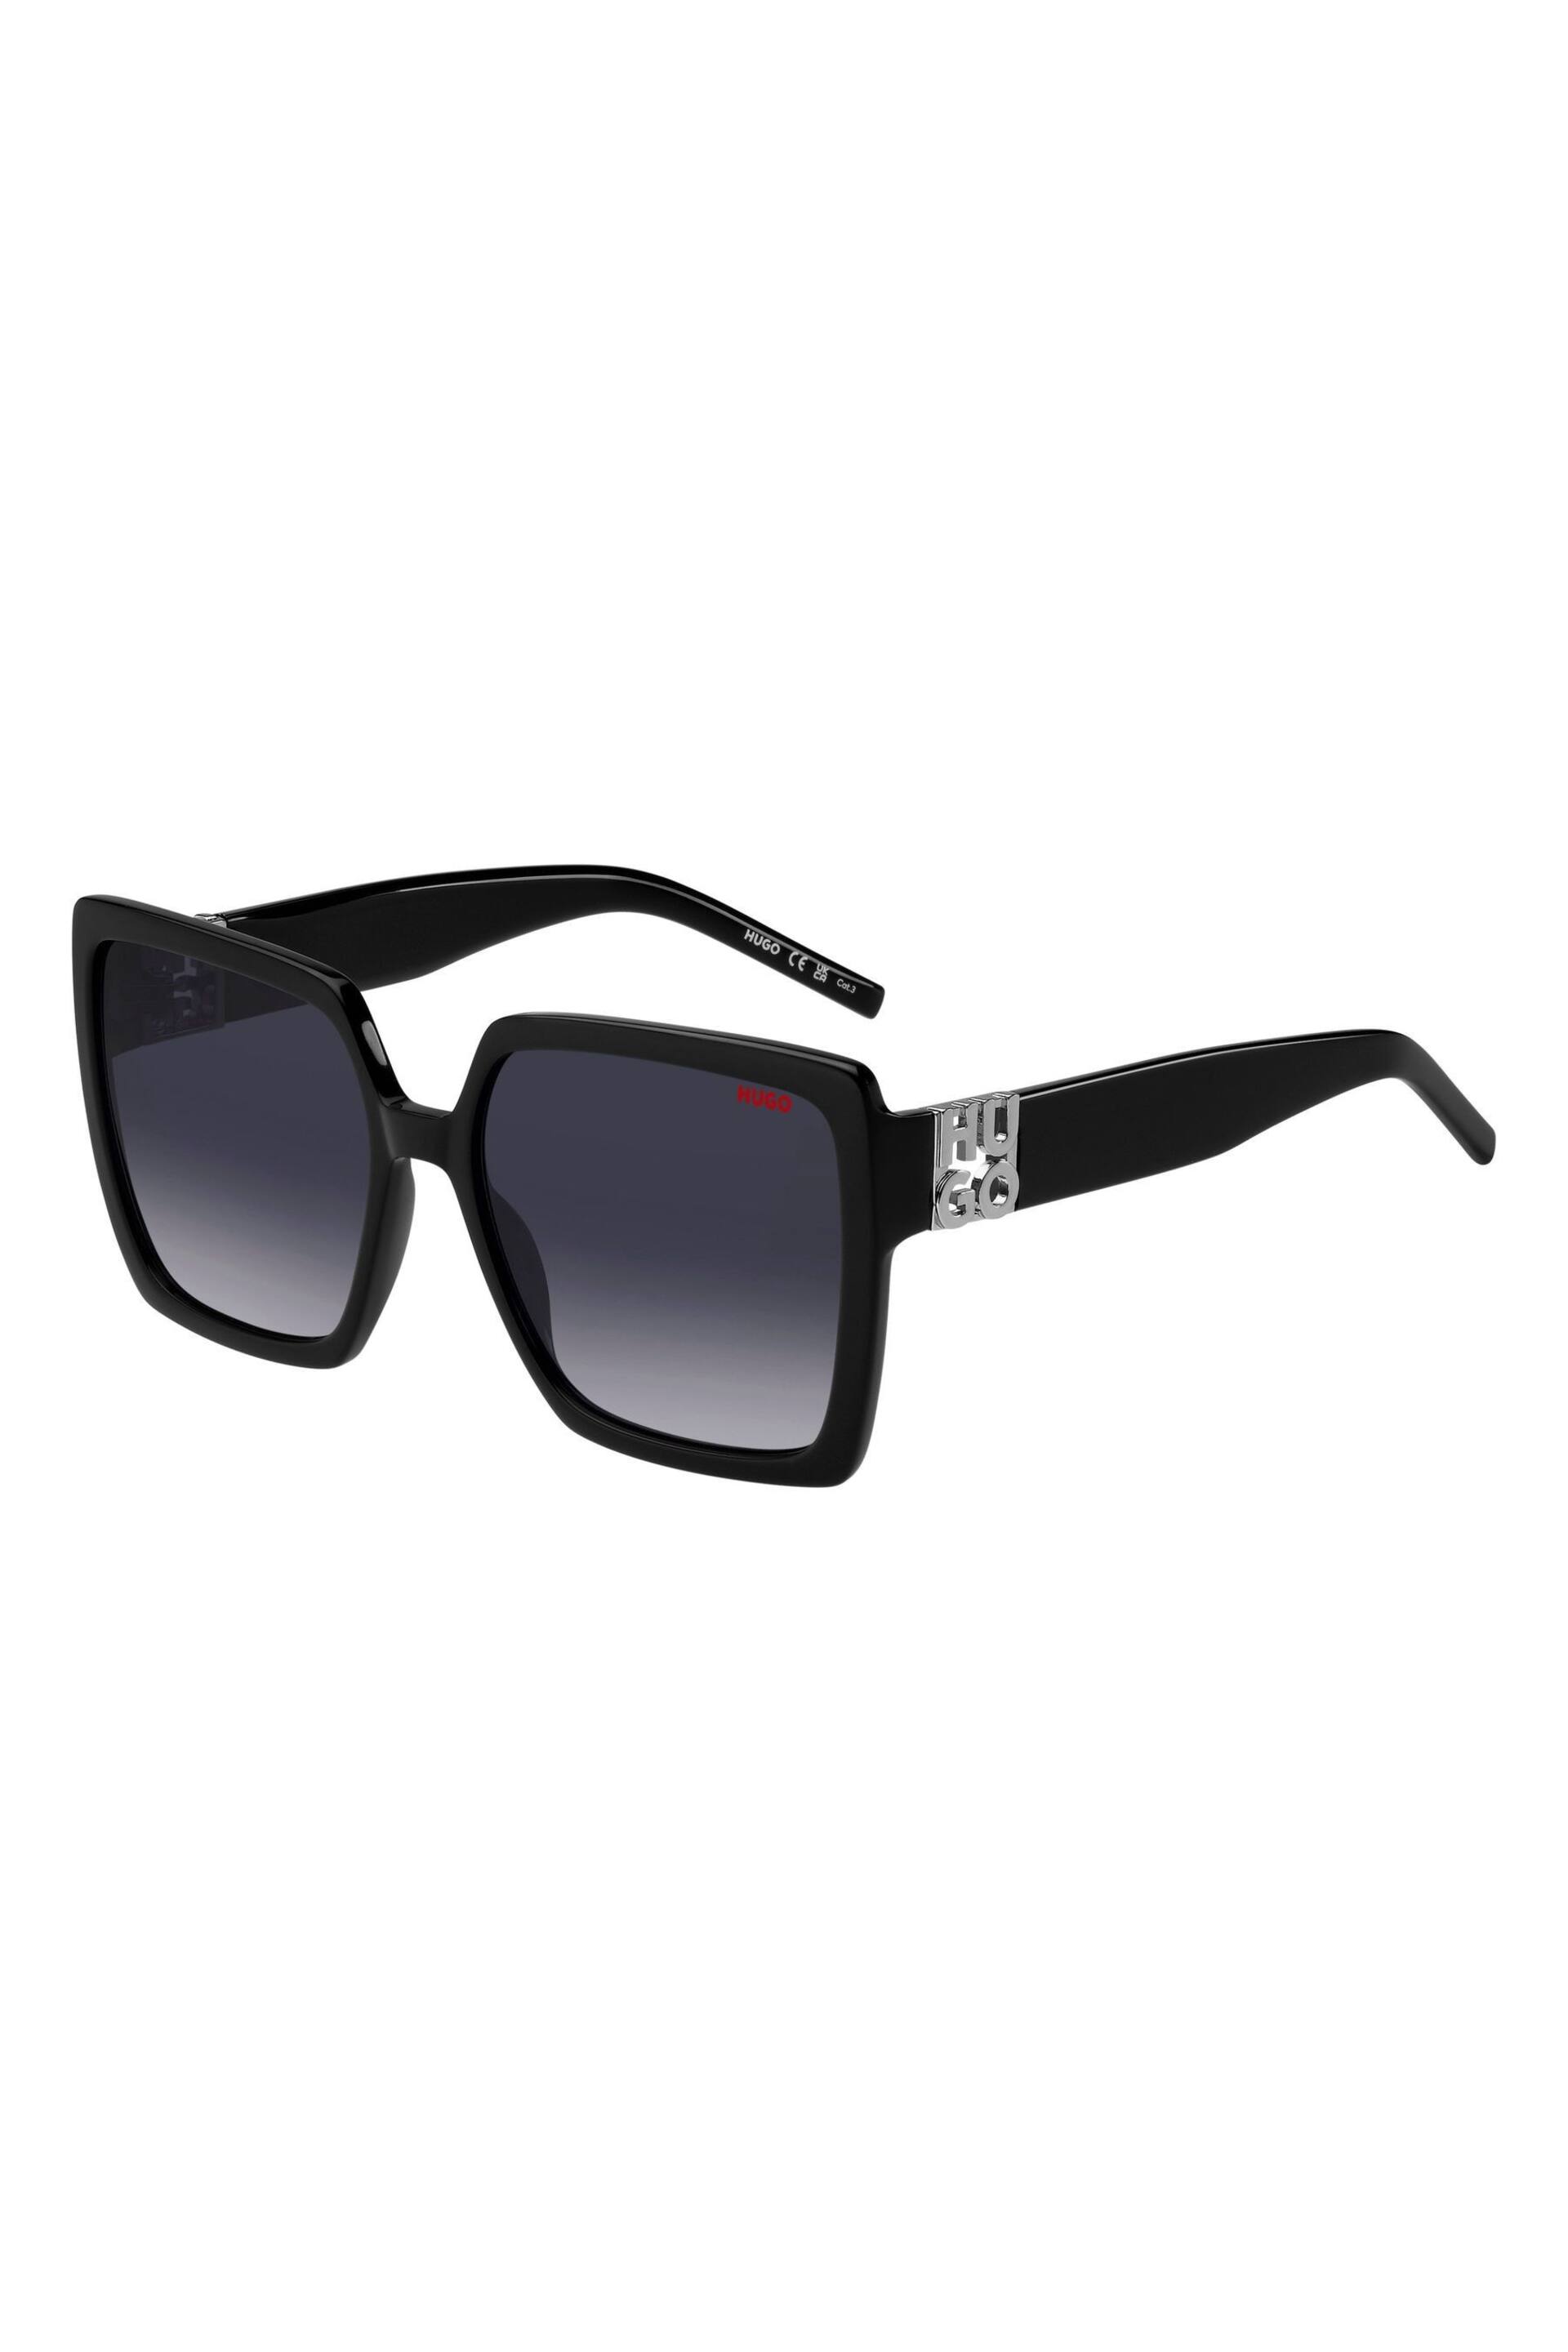 HUGO 1285/S Black Square Sunglasses - Image 1 of 4